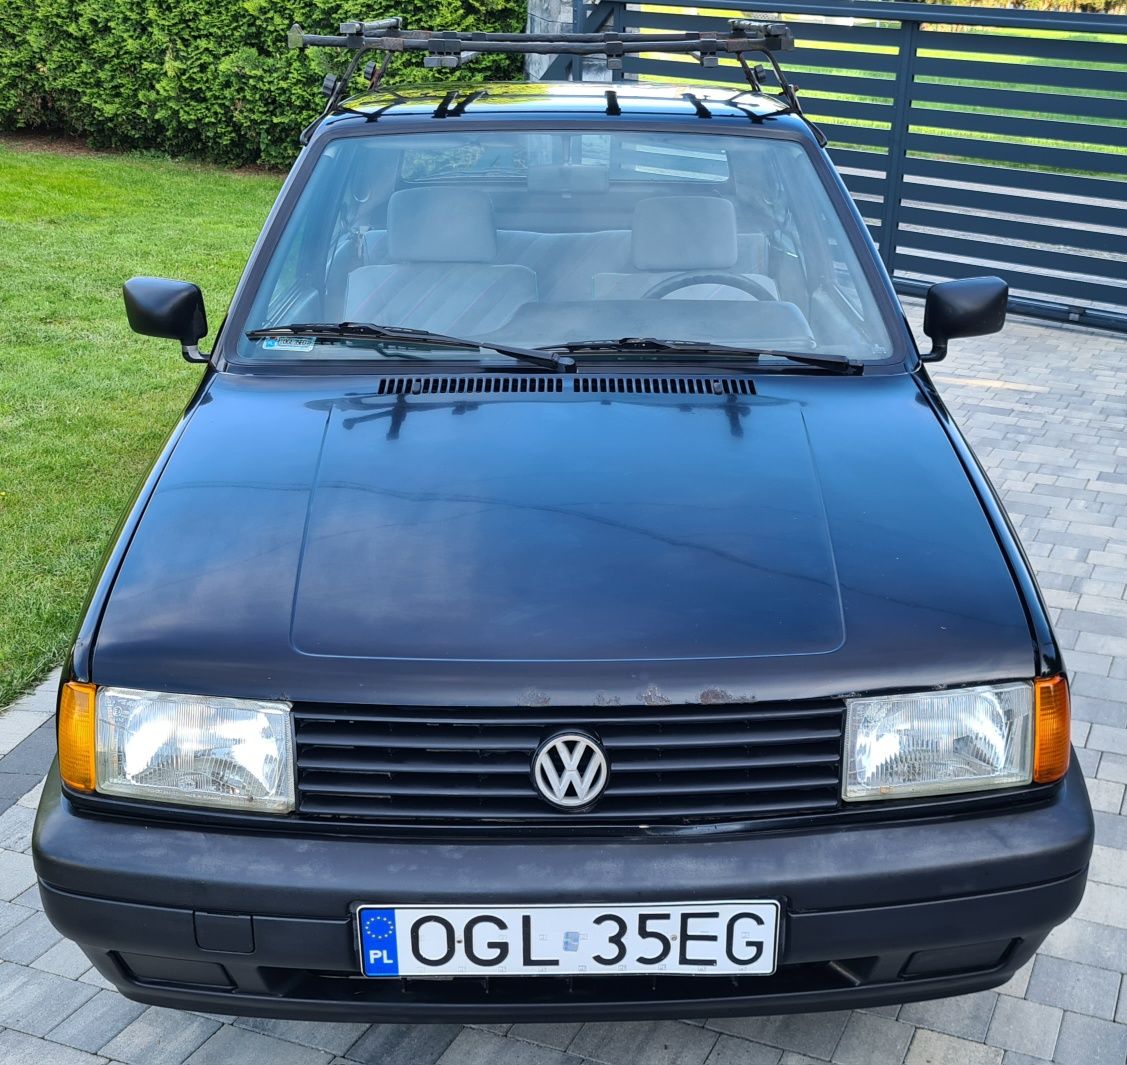 Volkswagen Polo 1.1 Benzyna Gaz Fondemtal